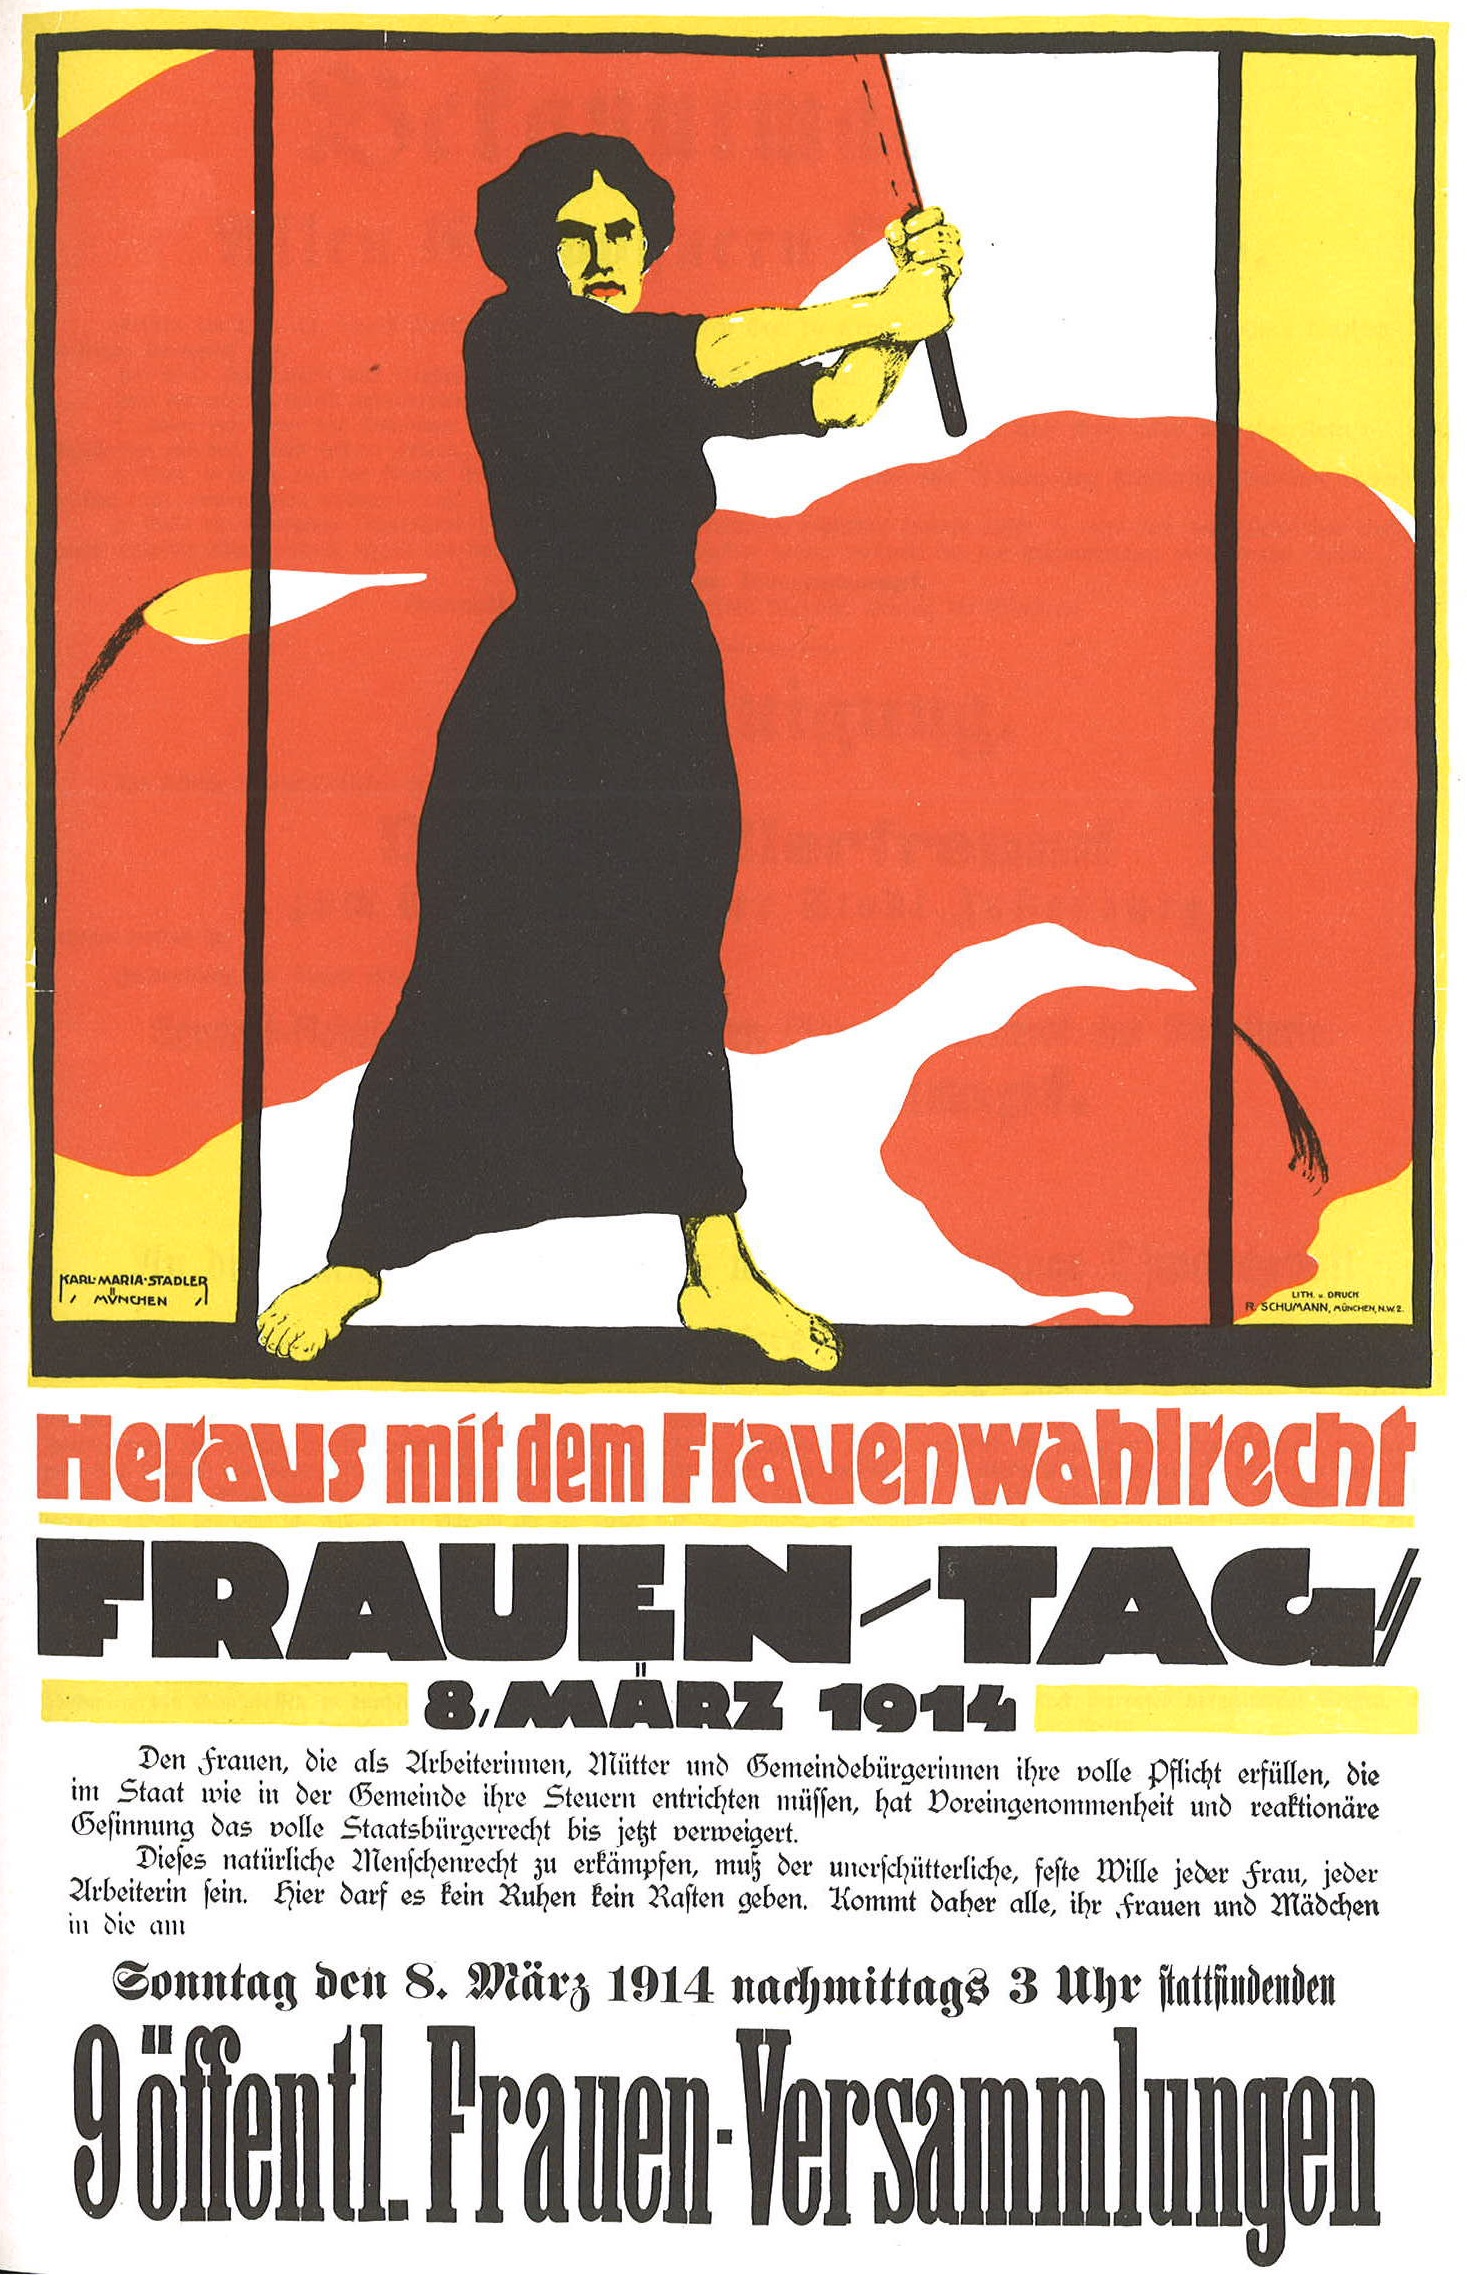 Frauentag_1914-German poster